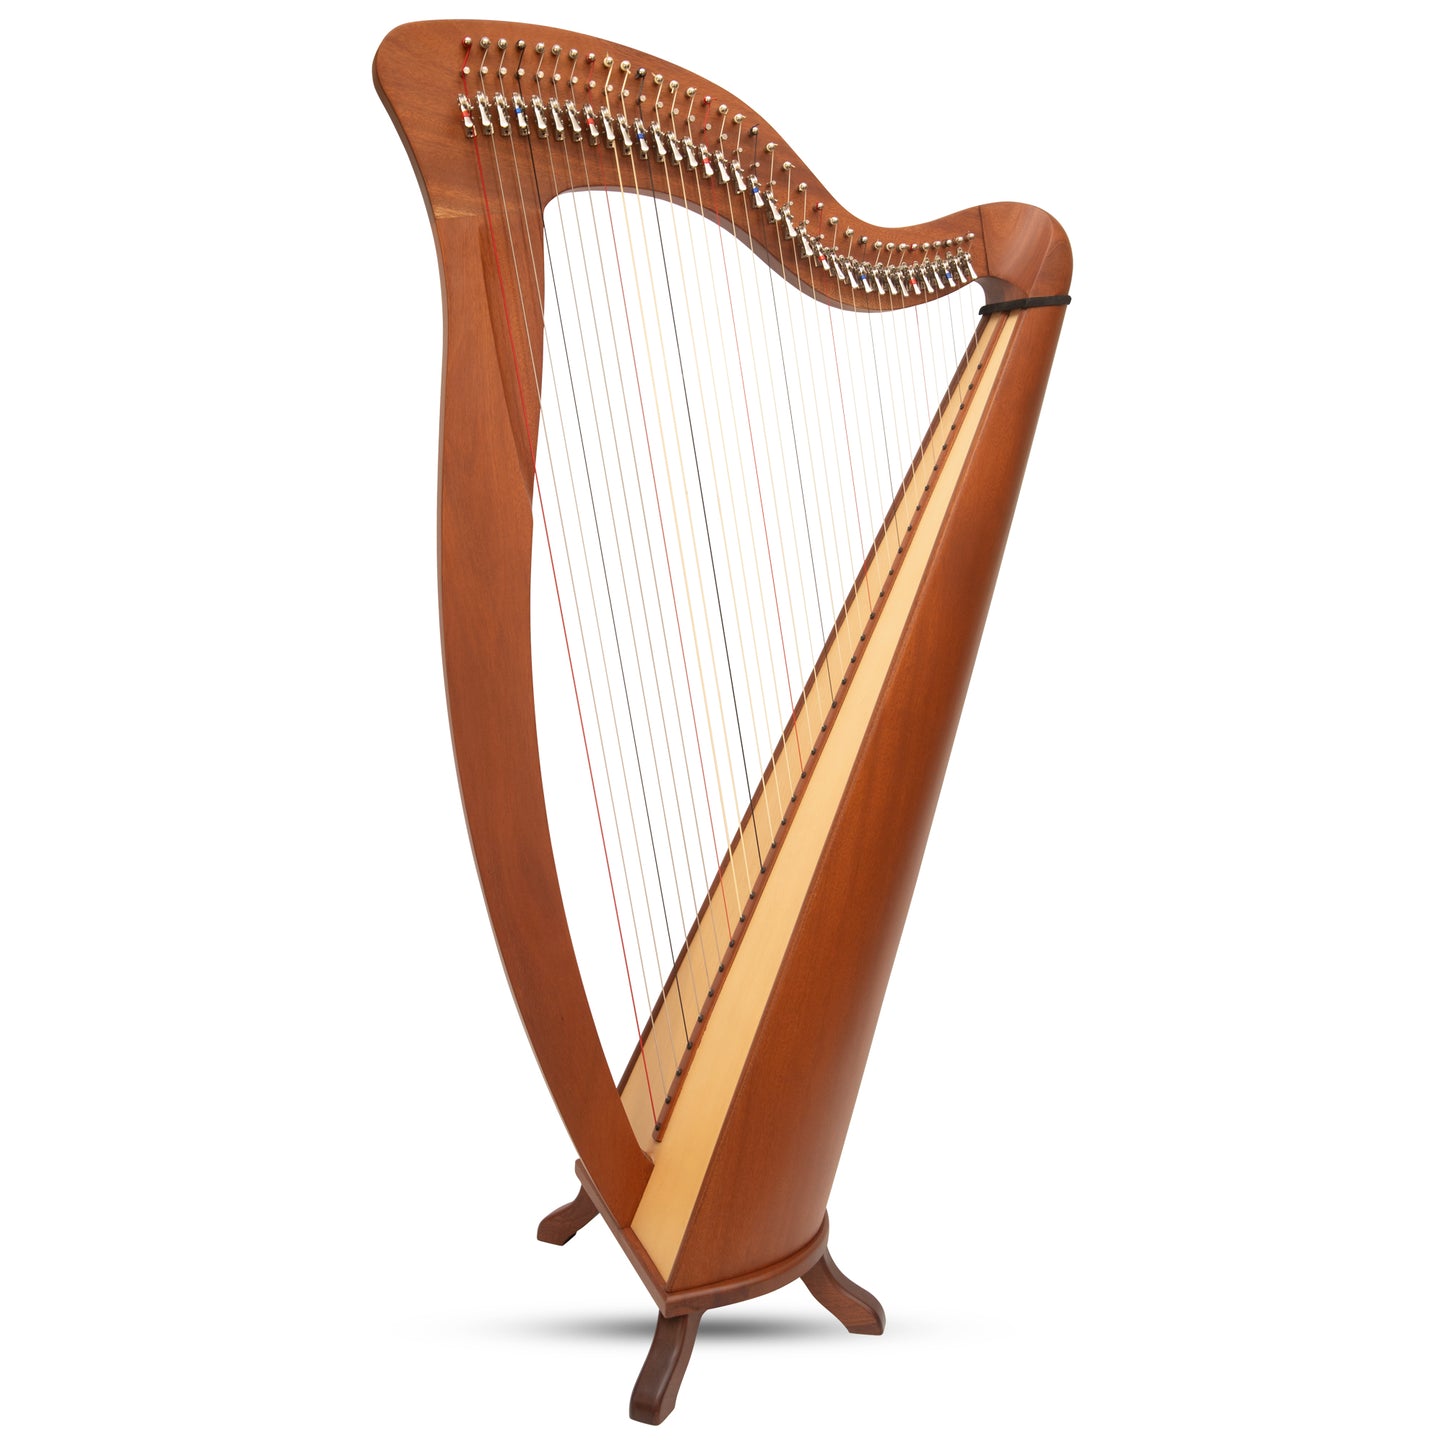 McHugh Harp 34 Strings Mahogany Wood Round back